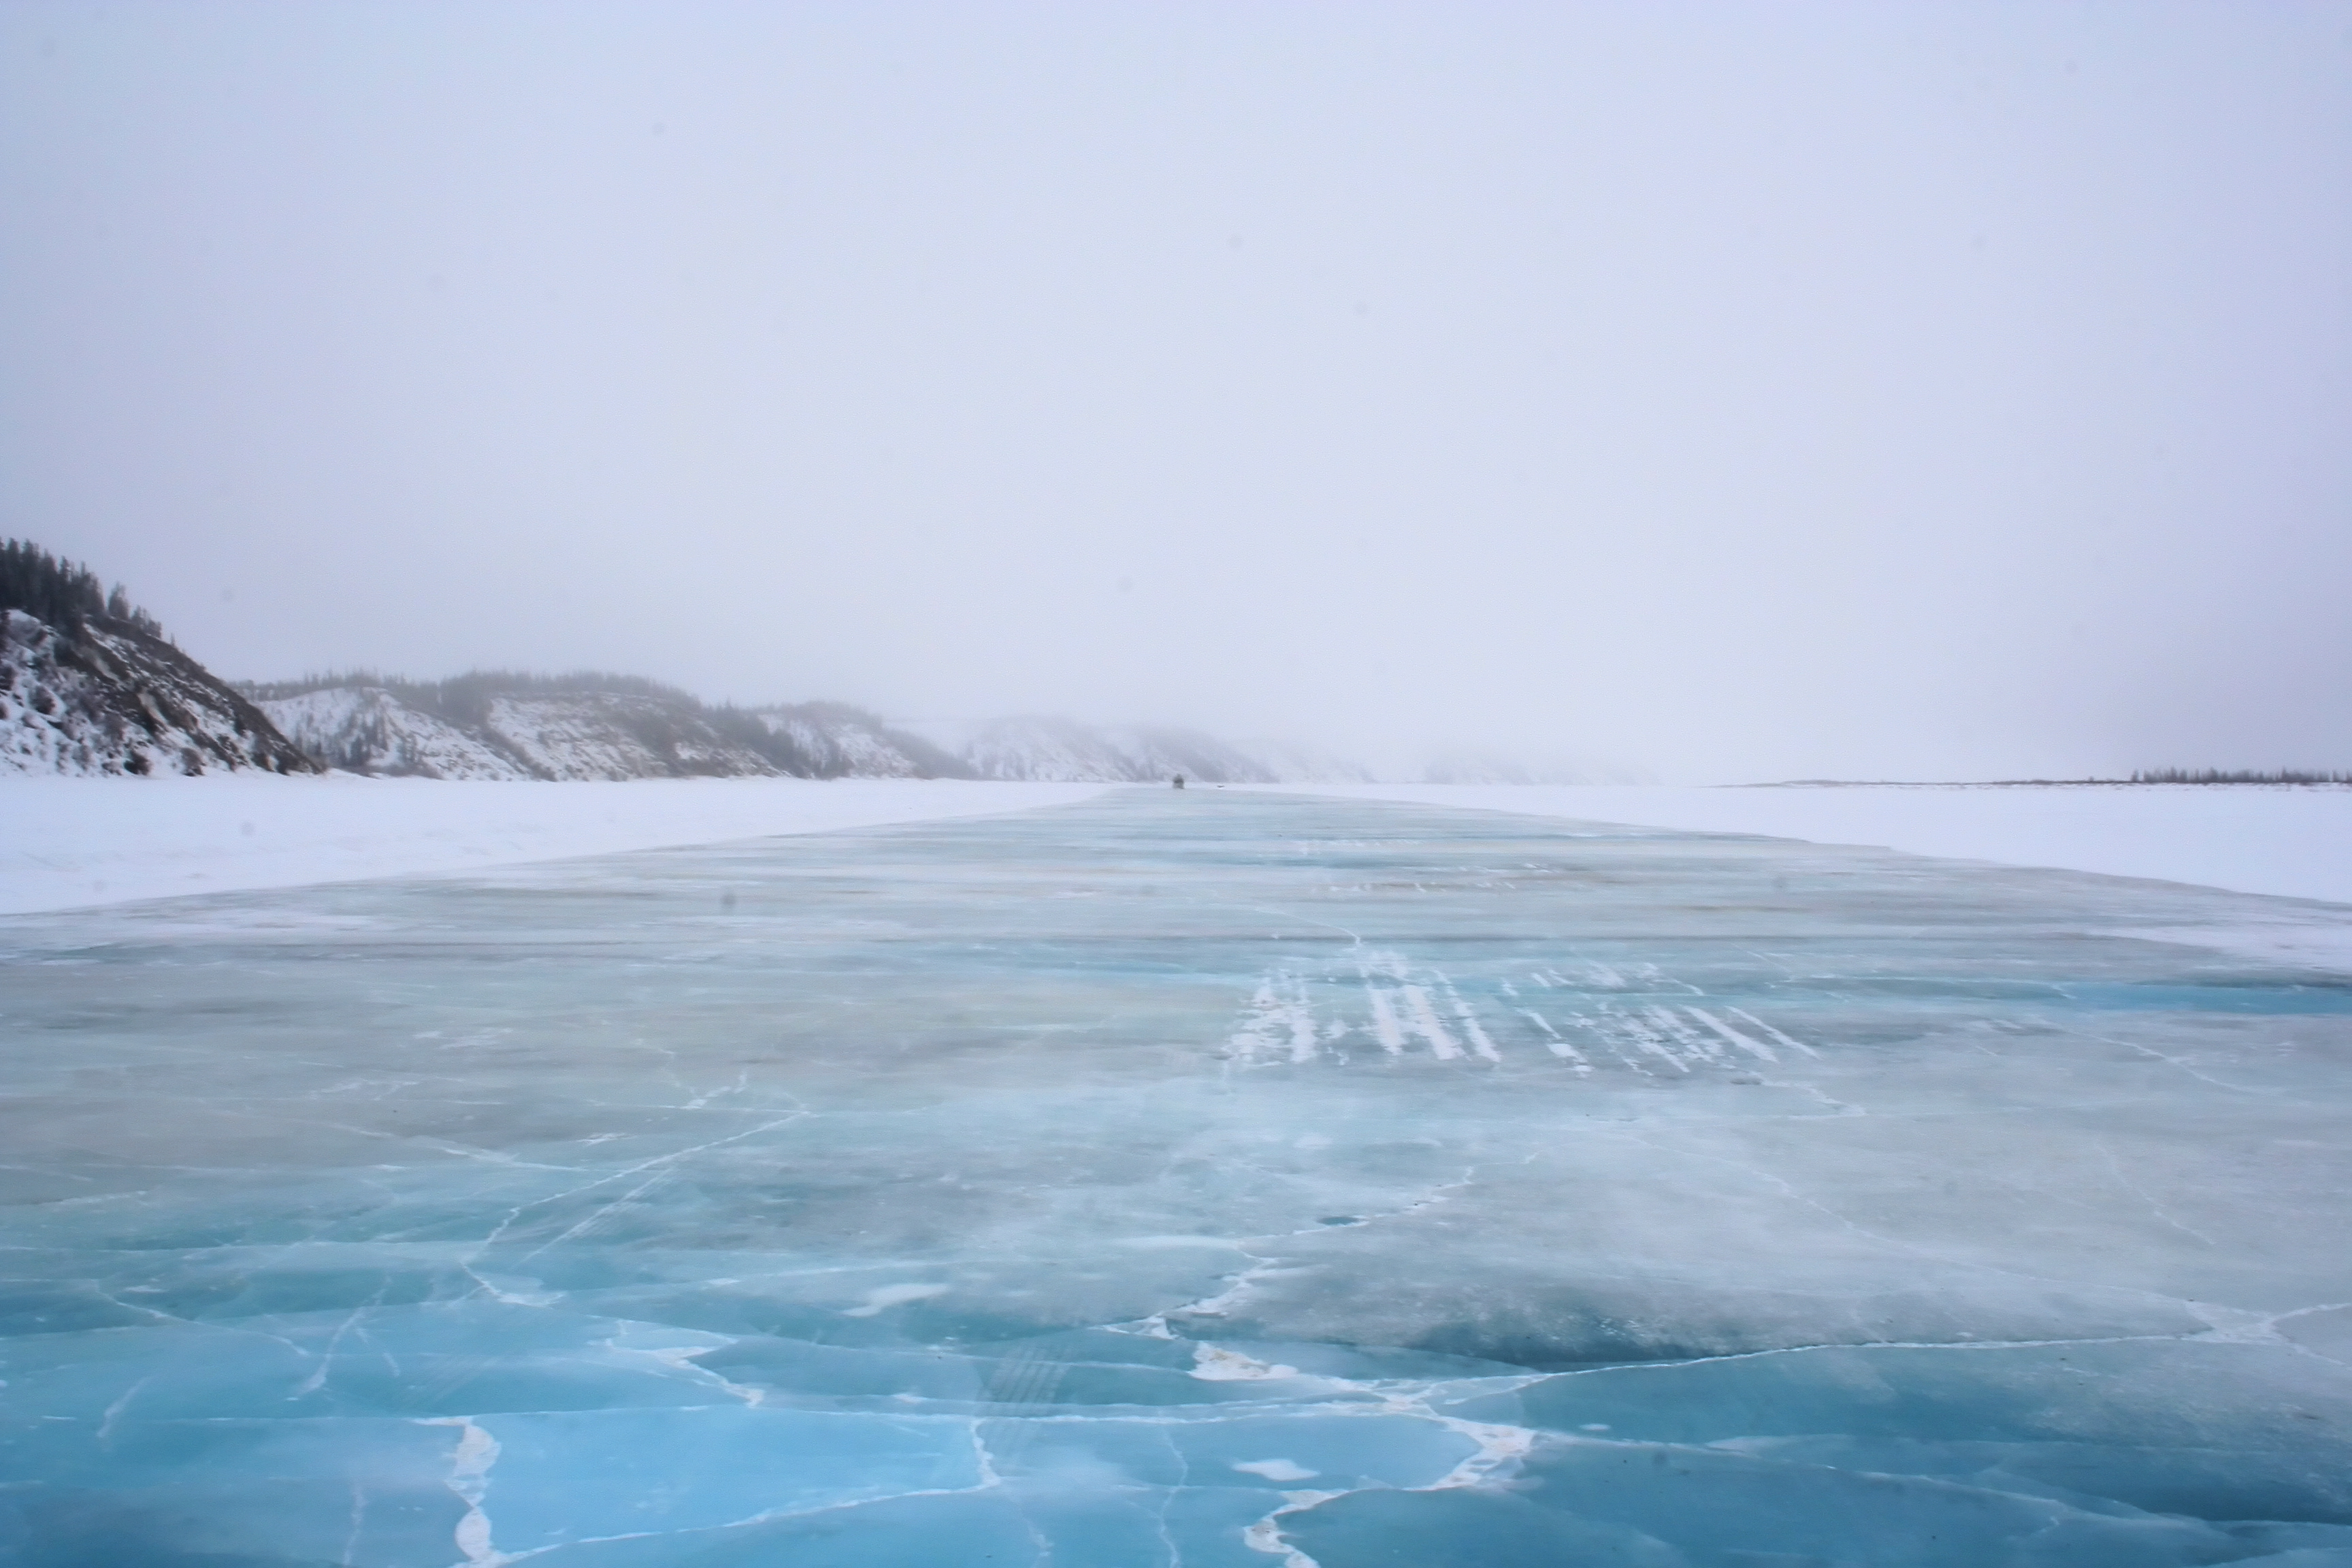 Вода в реке замерзла. Река Маккензи зимой. Река Маккензи Канада. Озеро Байкал ледостав. Лед на реке.